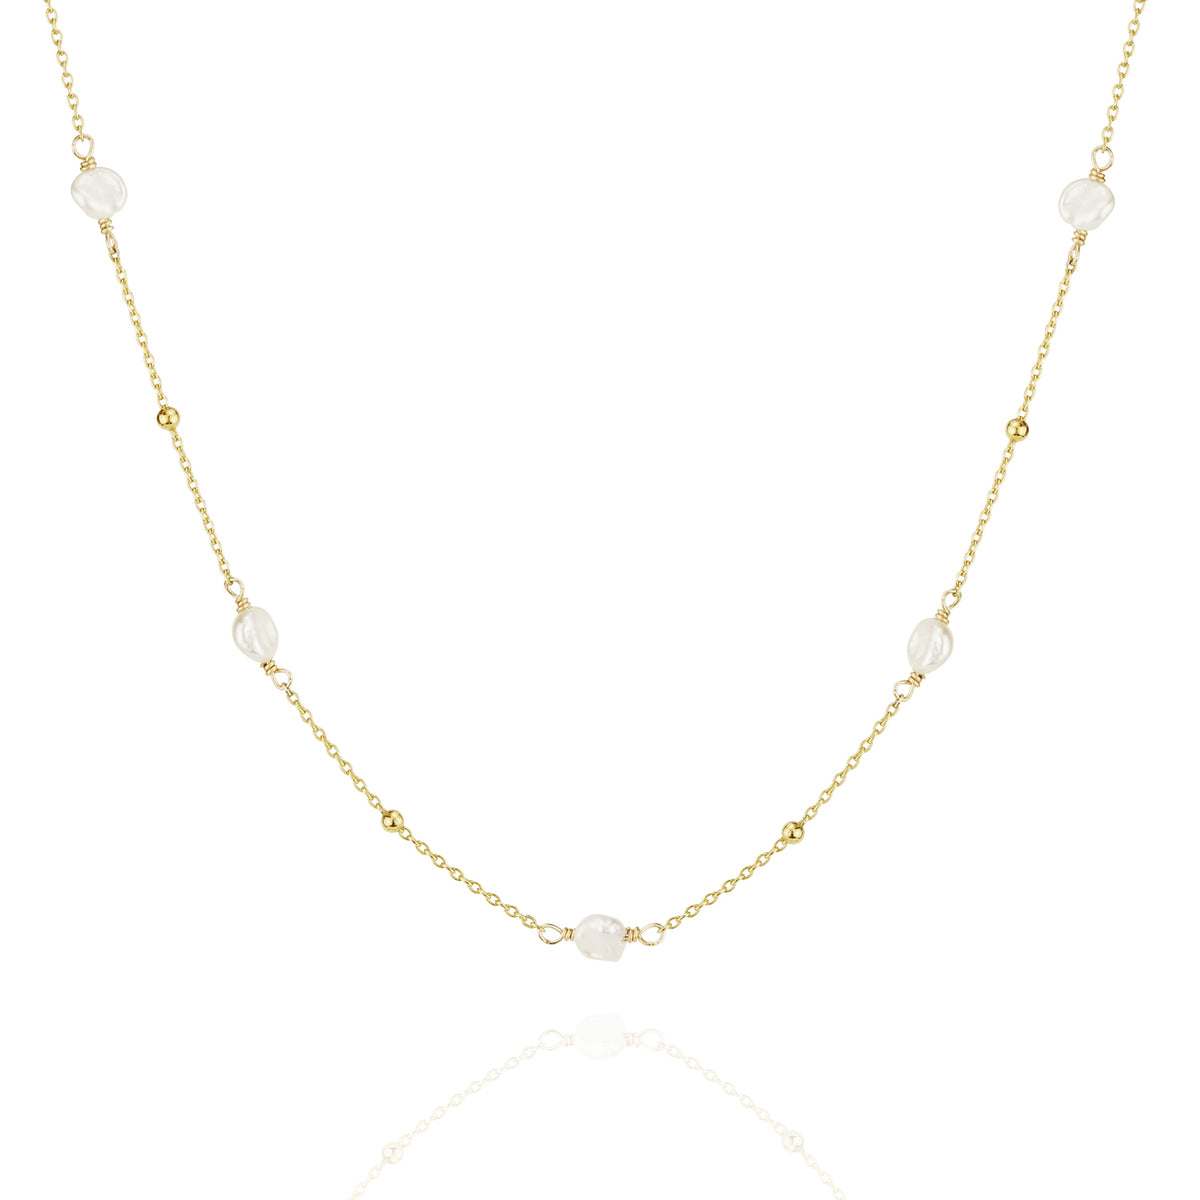 White Pearl & Satellite Chain Necklace